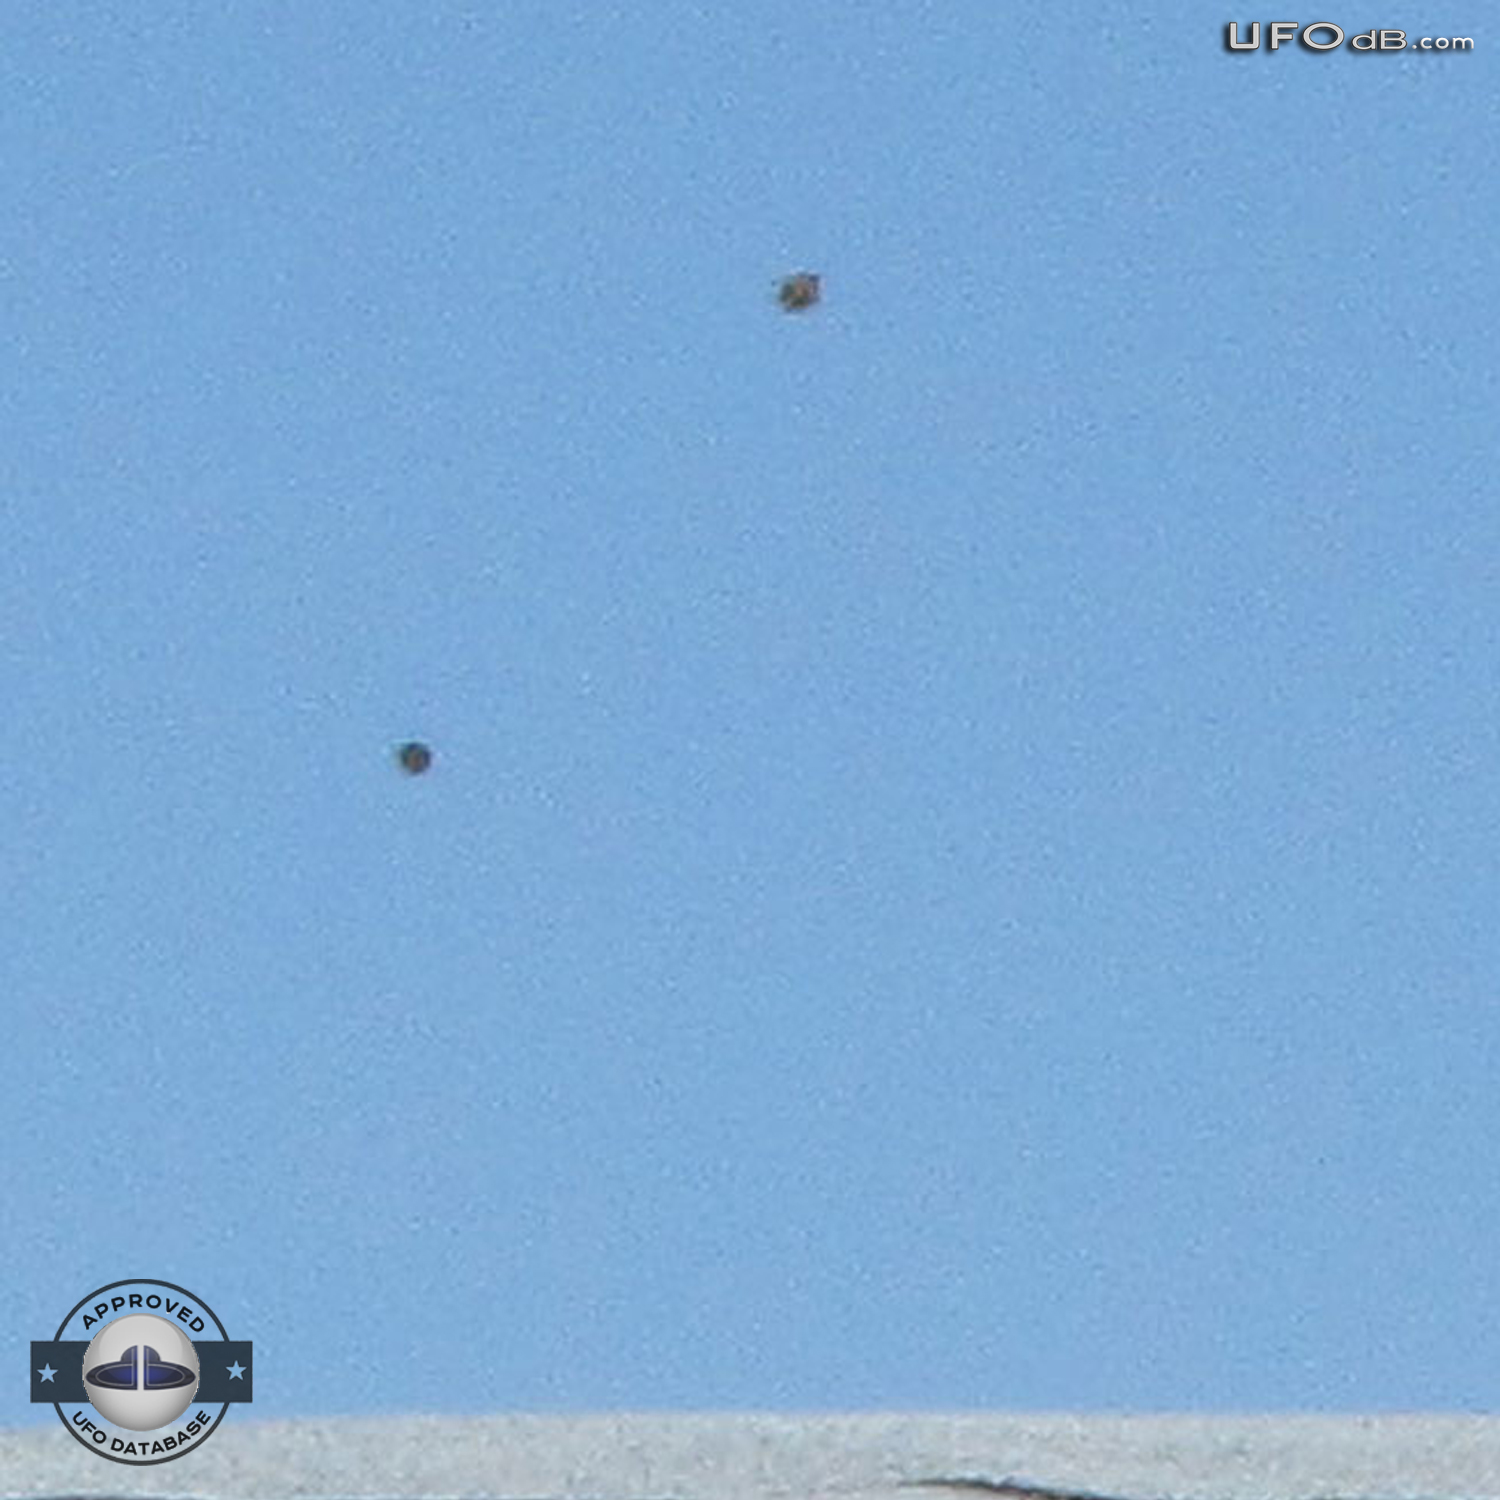 Dark UFOs near the Twentynine Palms US Marine corps base | May 7 2011 UFO Picture #315-2